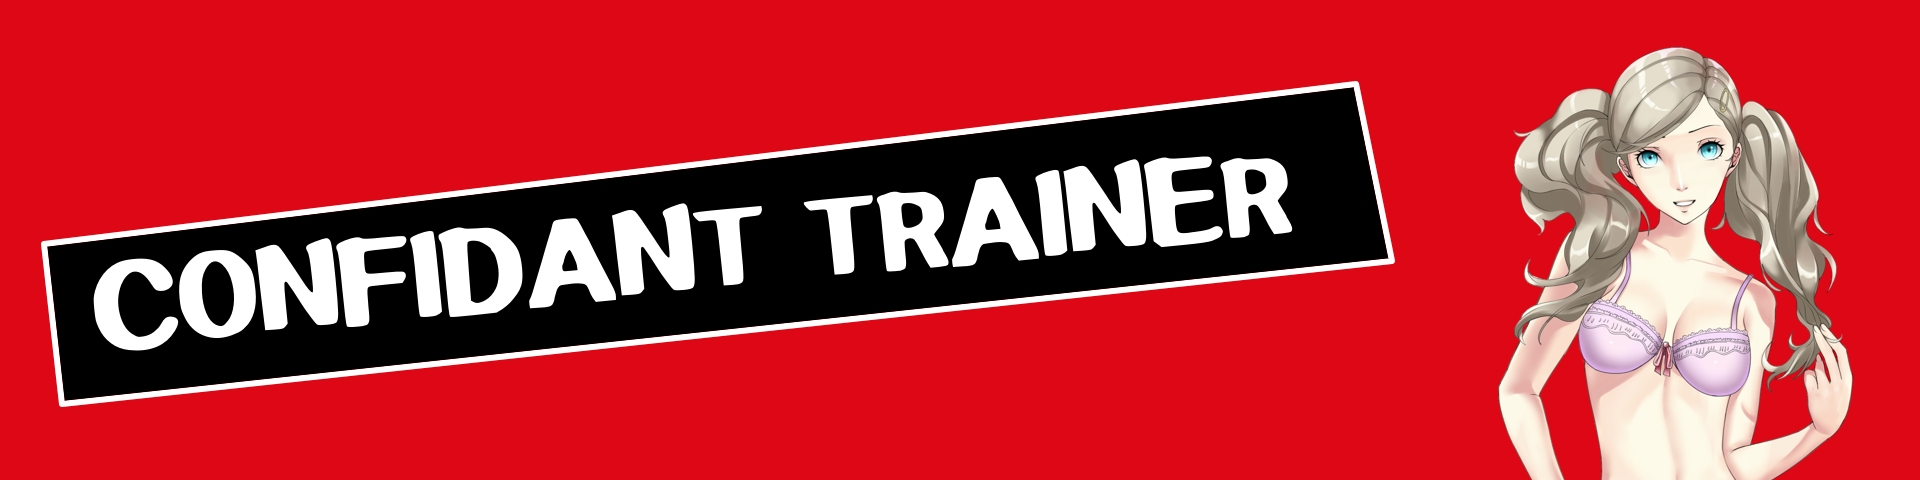 Confidant Trainer [v0.1] main image